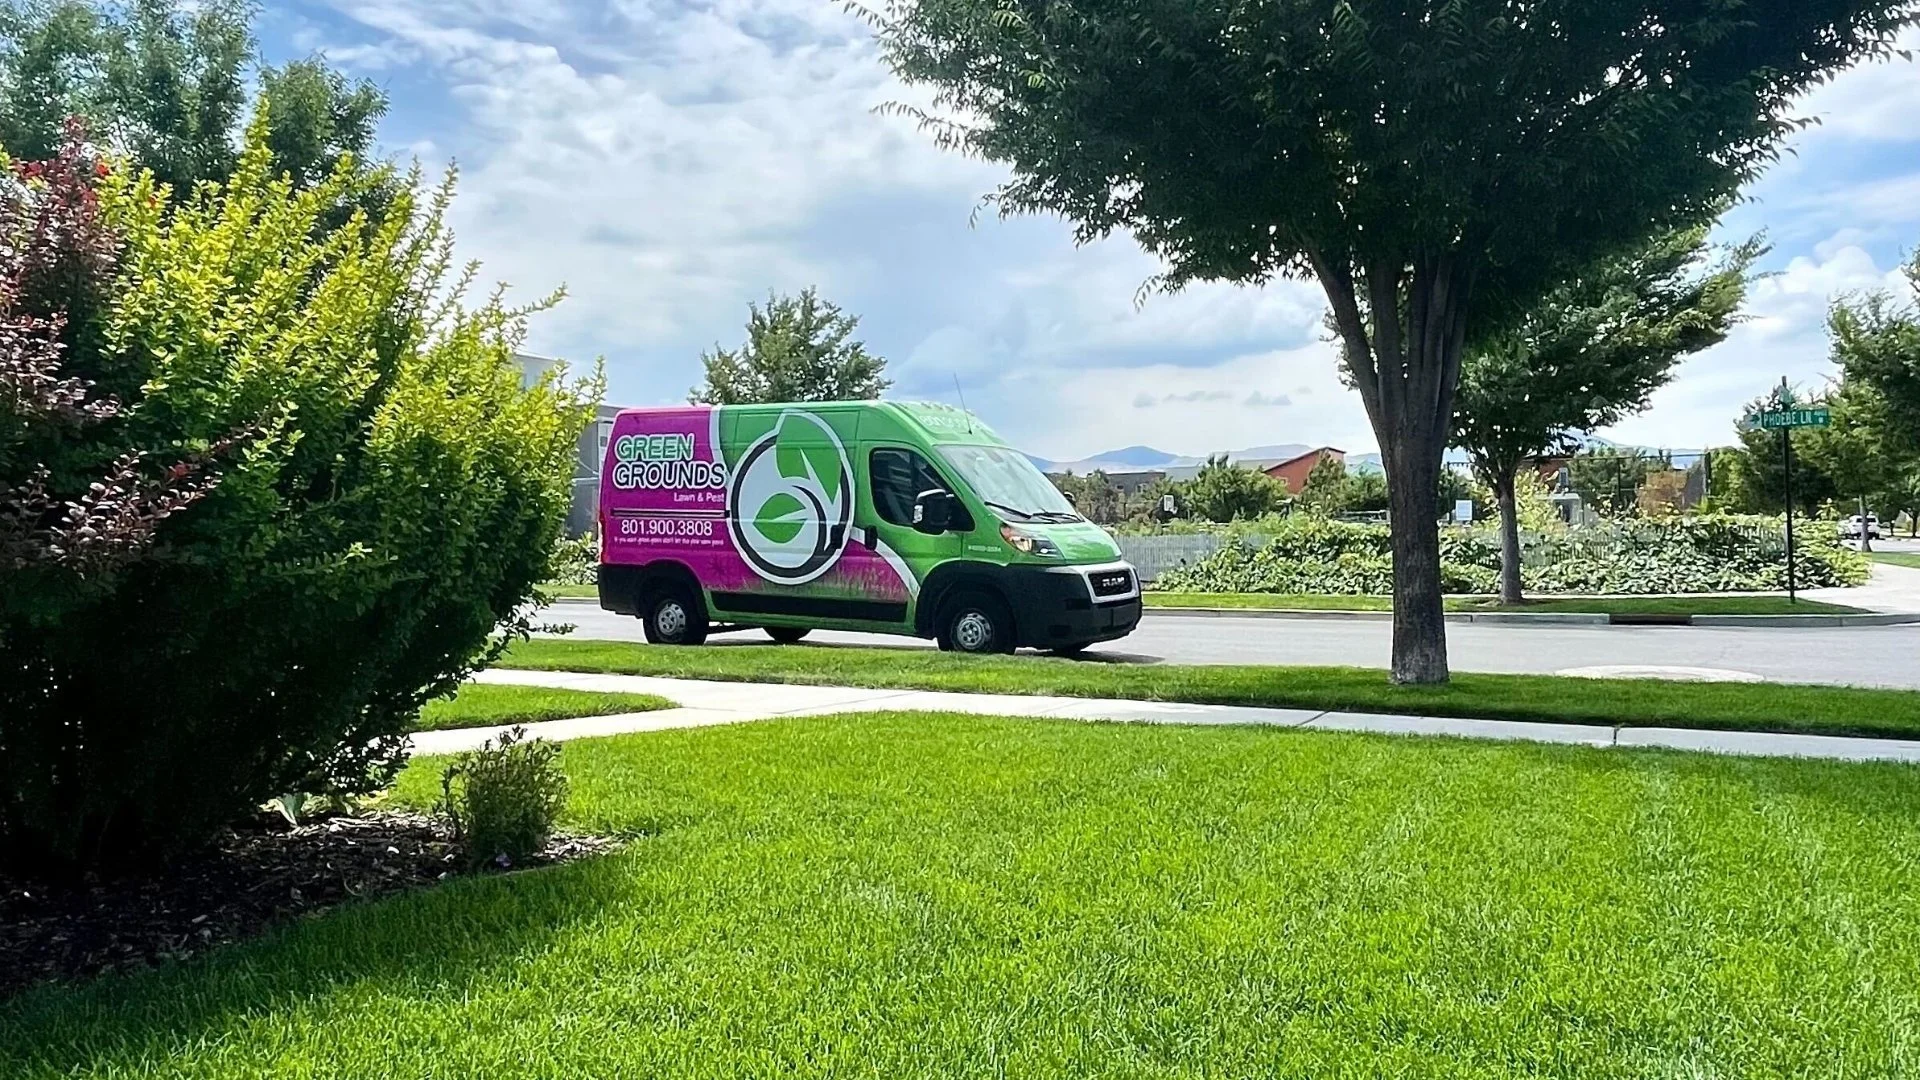 Green Grounds Lawn & Pest van at Lehi, UT property preparing to apply liquid aeration.